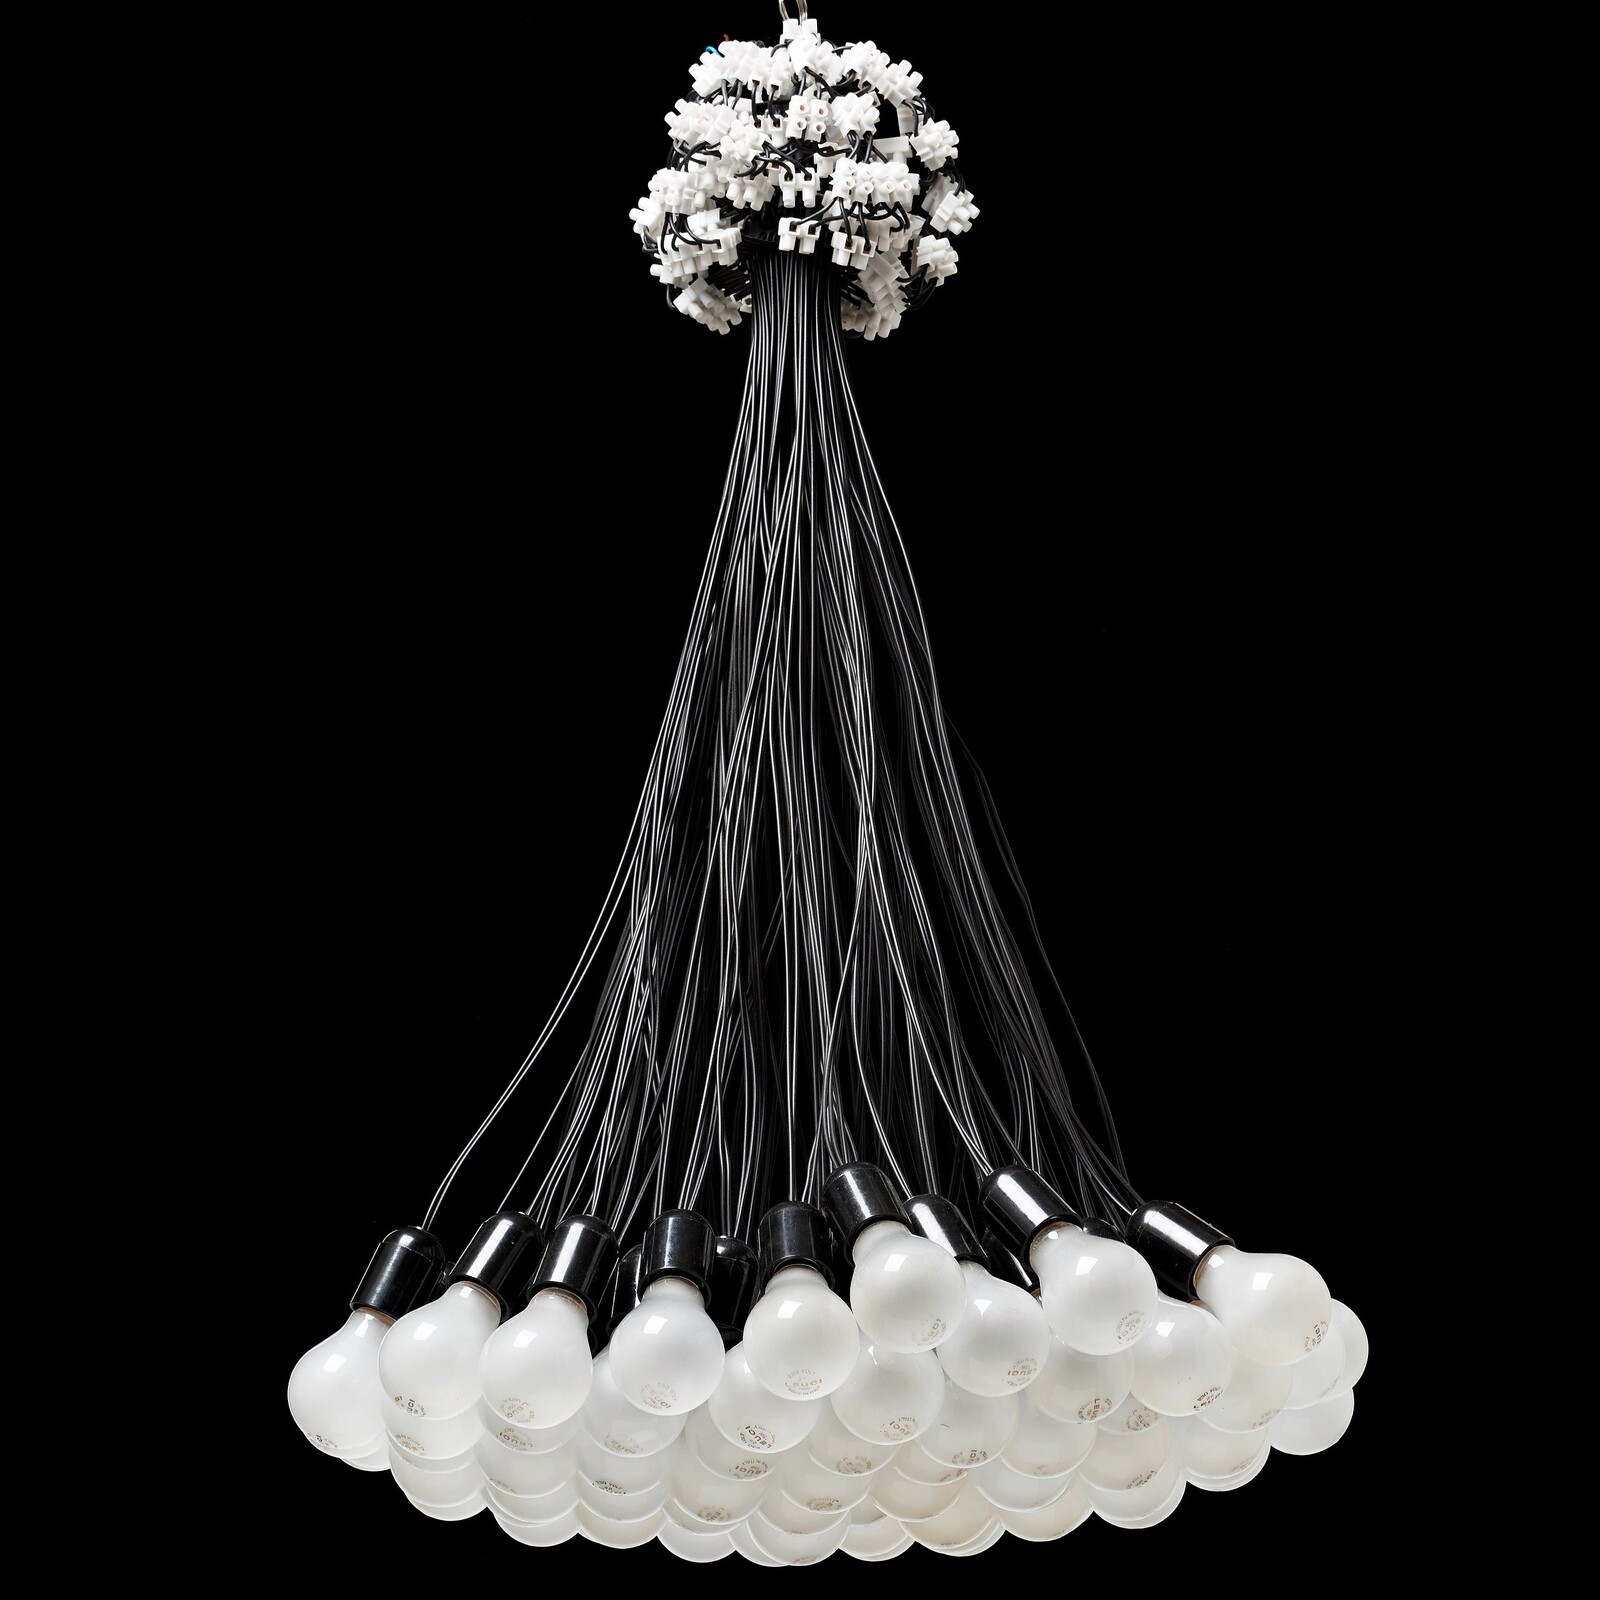 85 Lamps, Droog Design, Holland., https://www.bukowskis.com/sv/auctions/585/141-rody-graumans-takarmatur-85-lamps-droog-design-holland